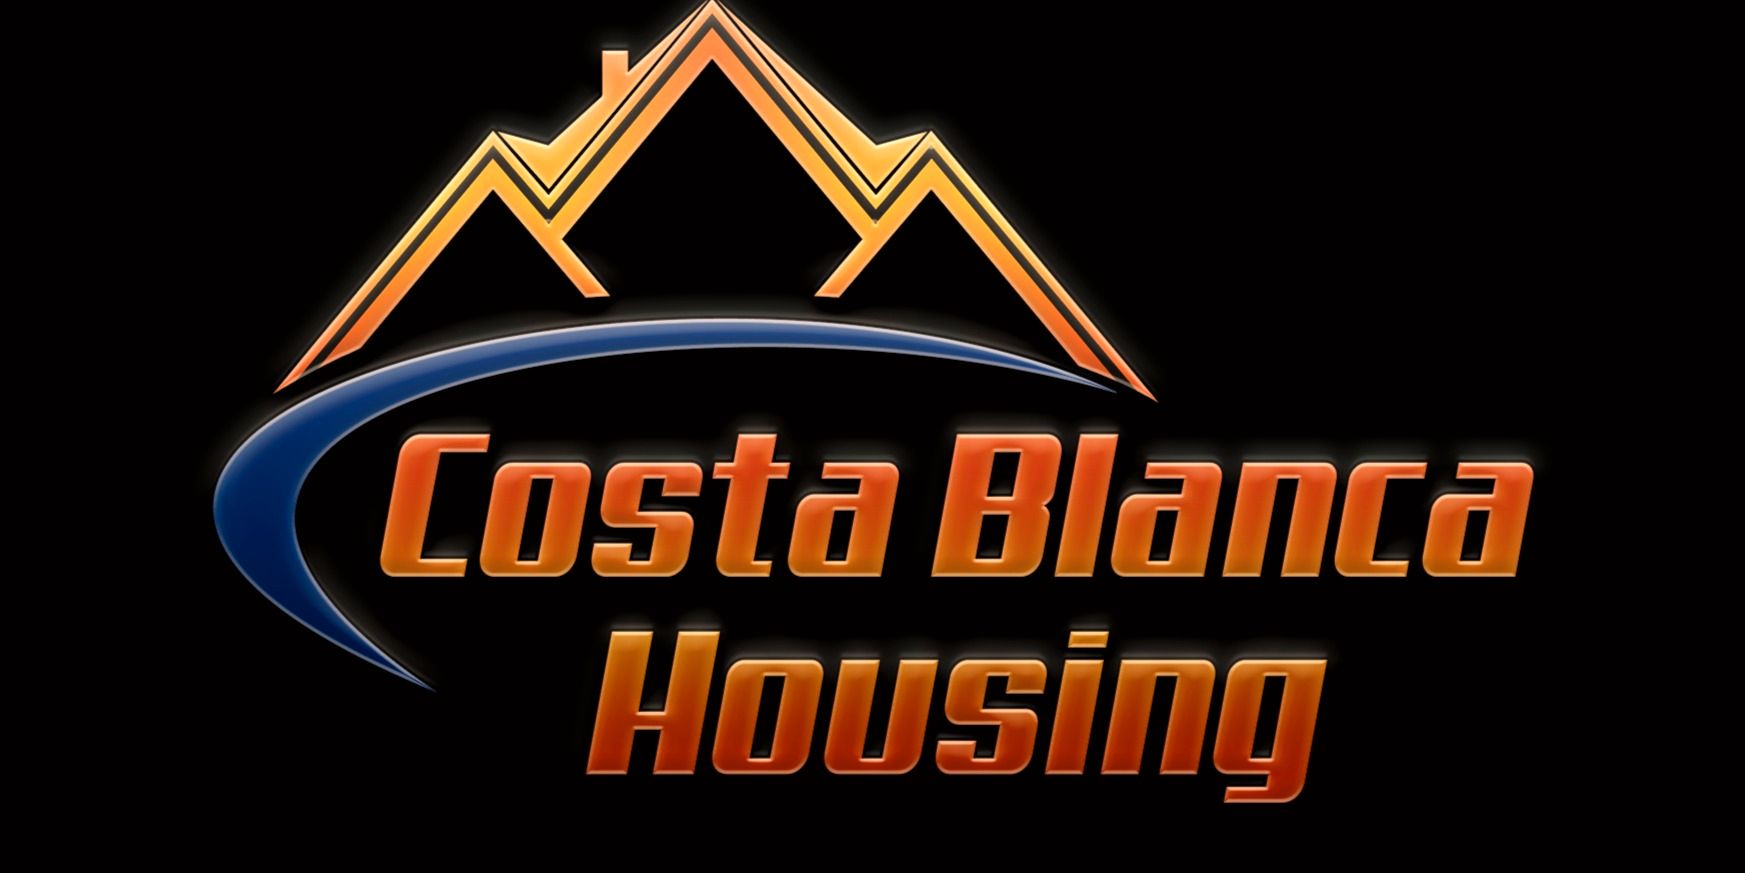 COSTA BLANCA HOUSING